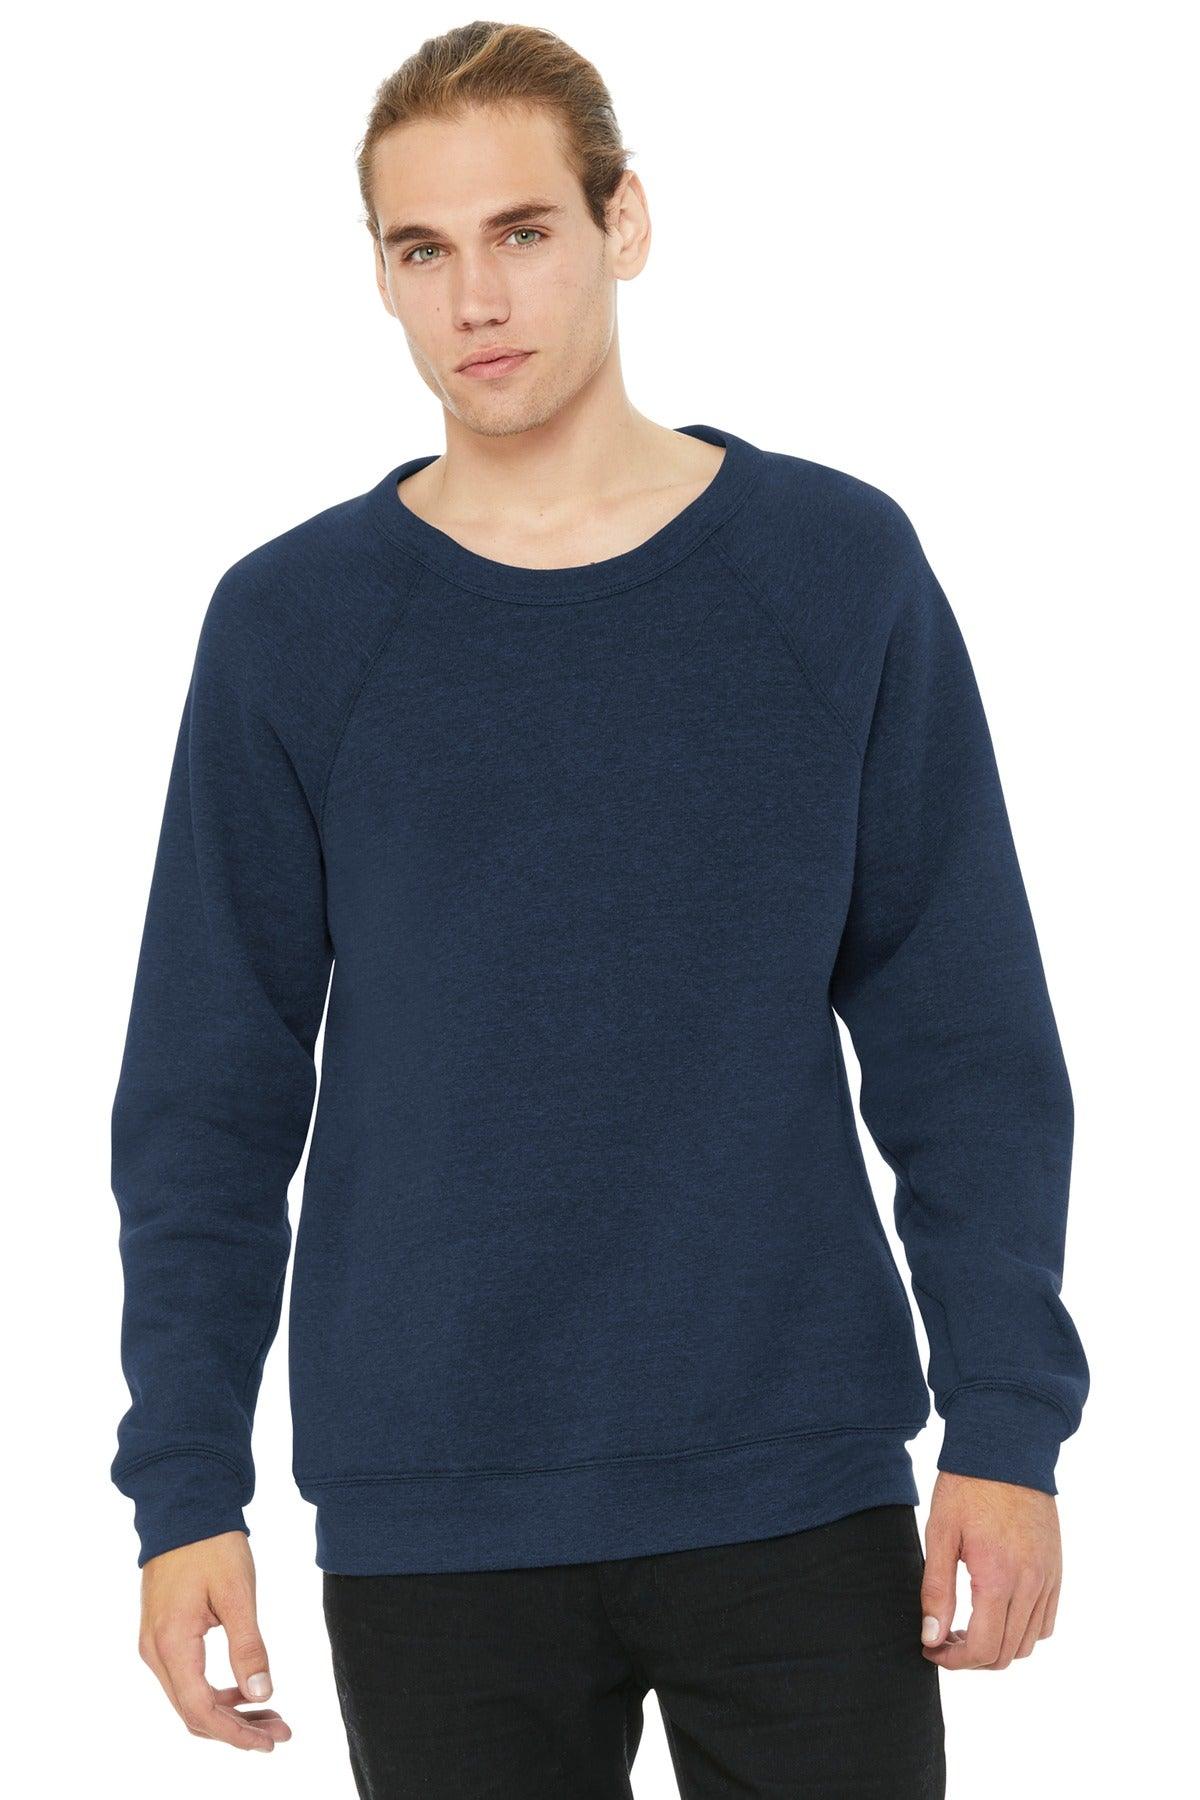 BELLA+CANVAS Unisex Sponge Fleece Raglan Sweatshirt. BC3901 - Dresses Max